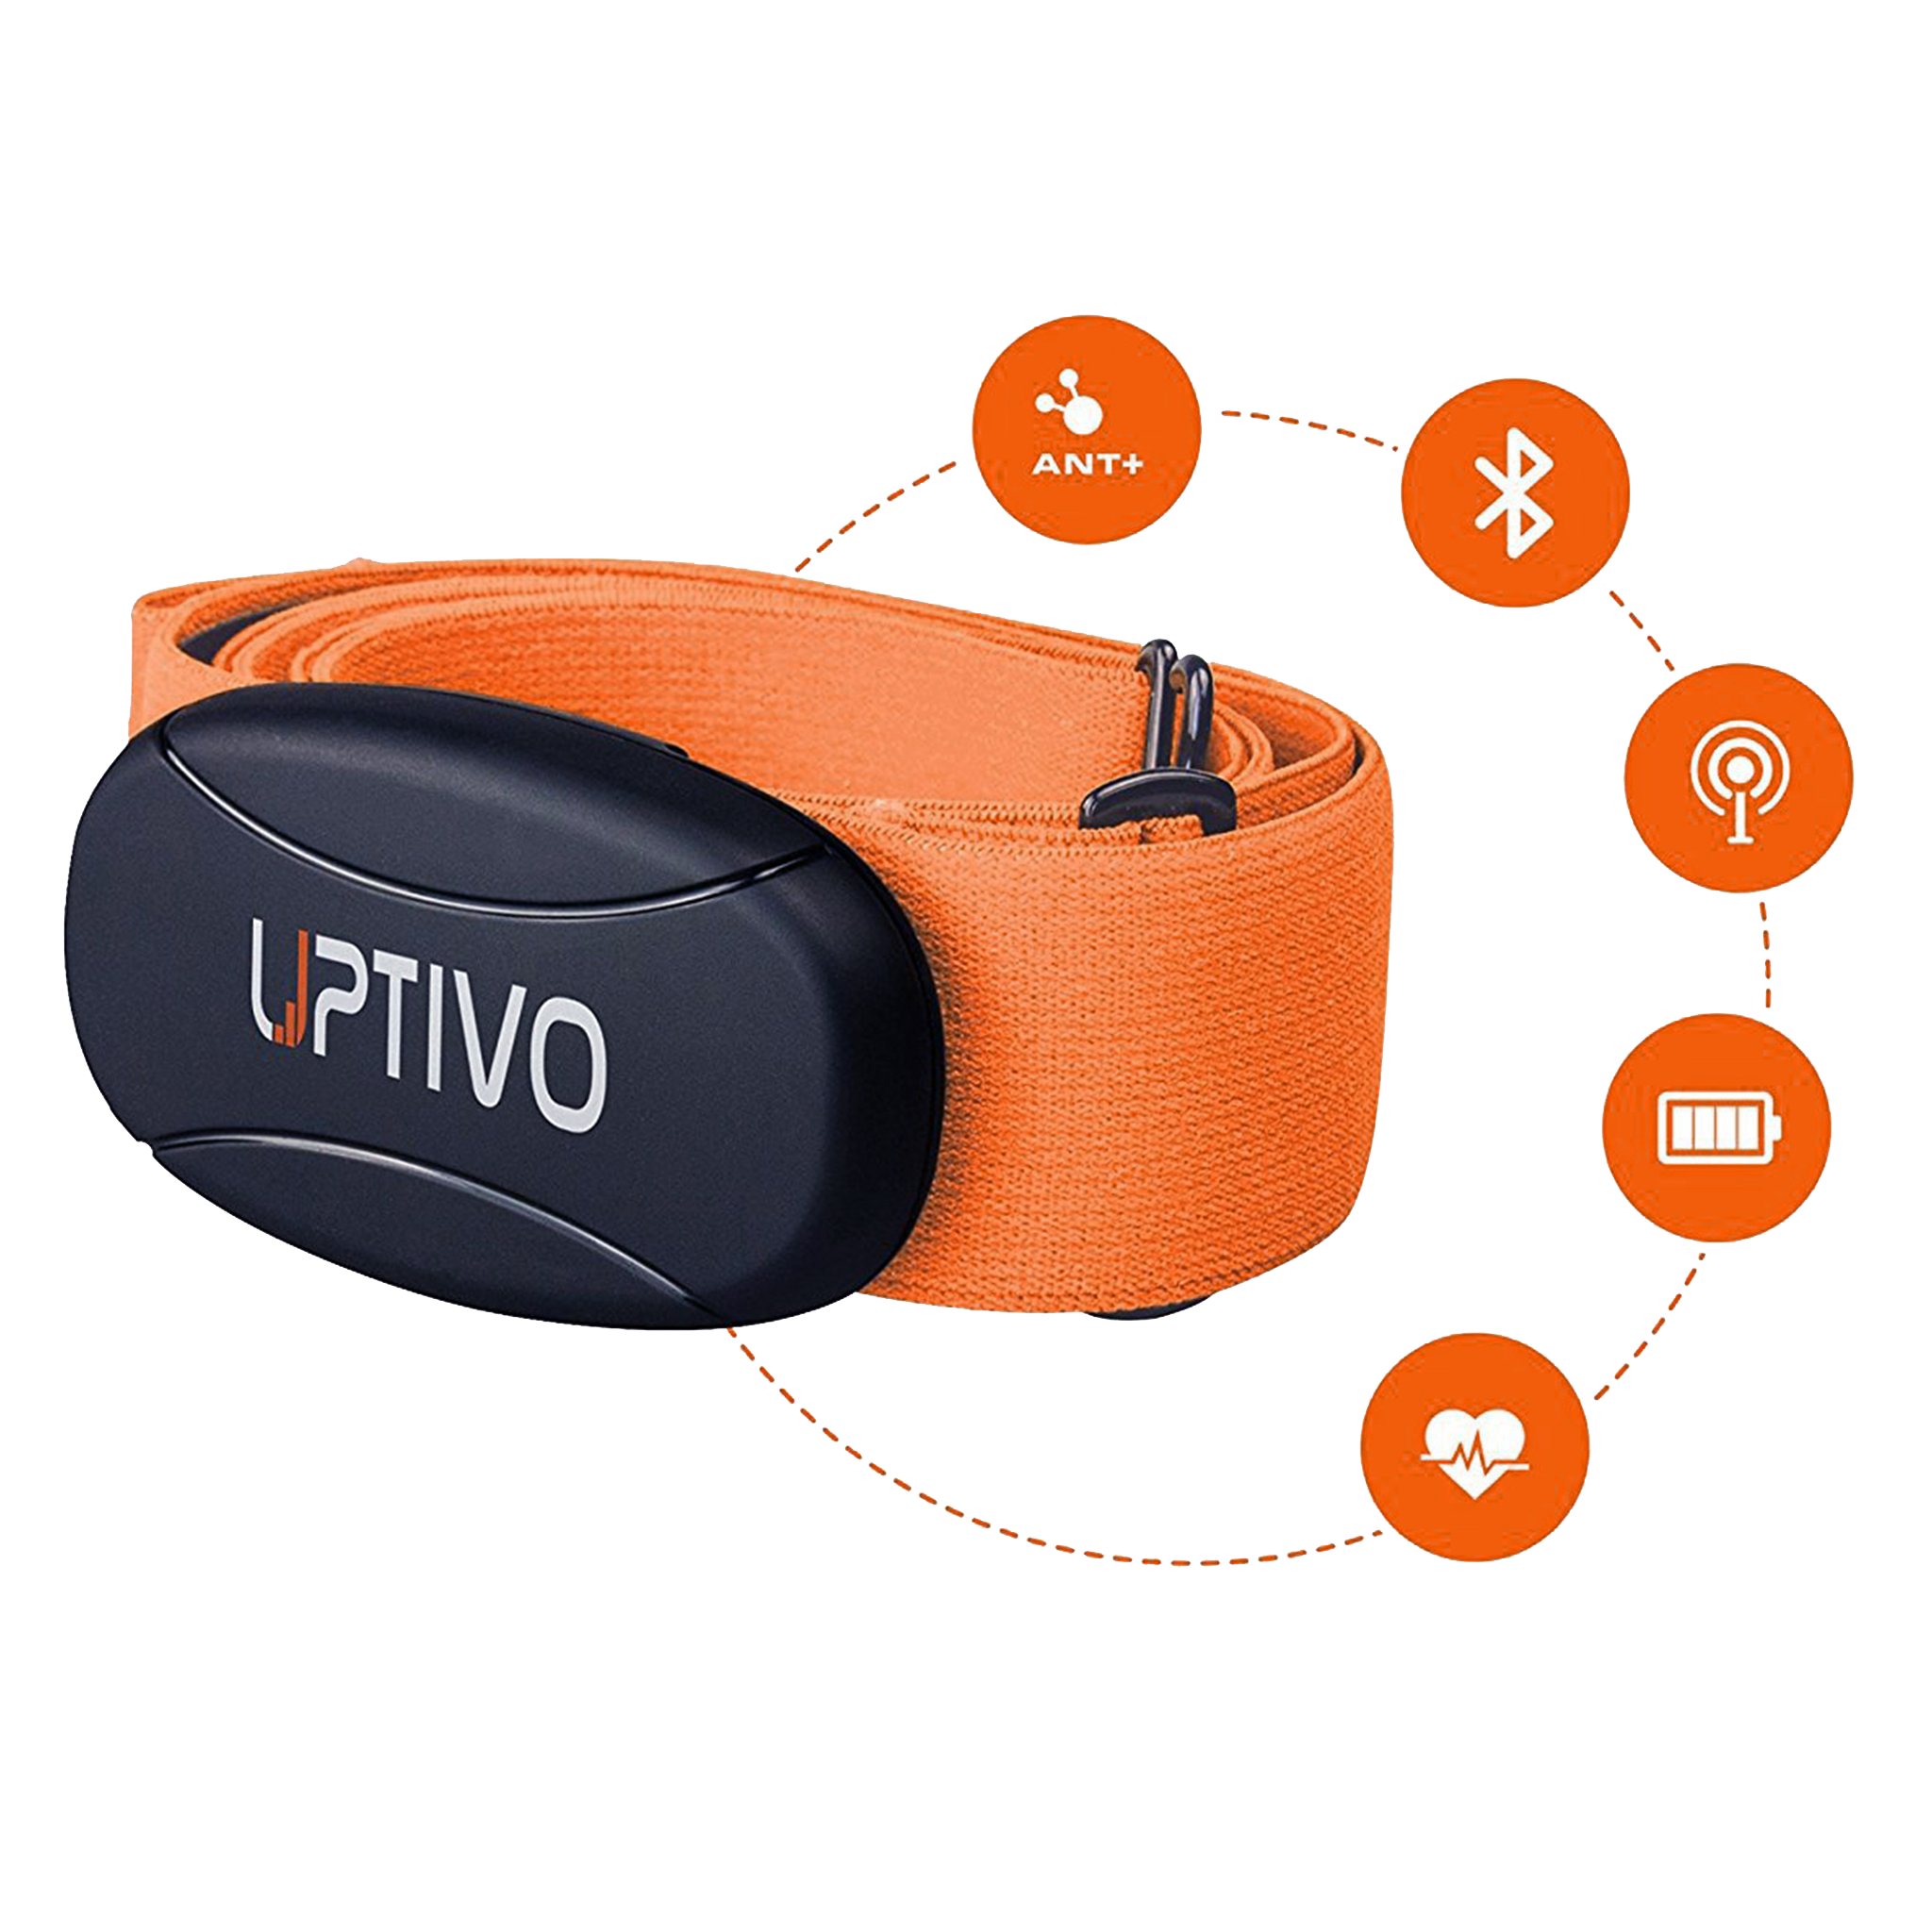 Uptivo Heart Rate Training System